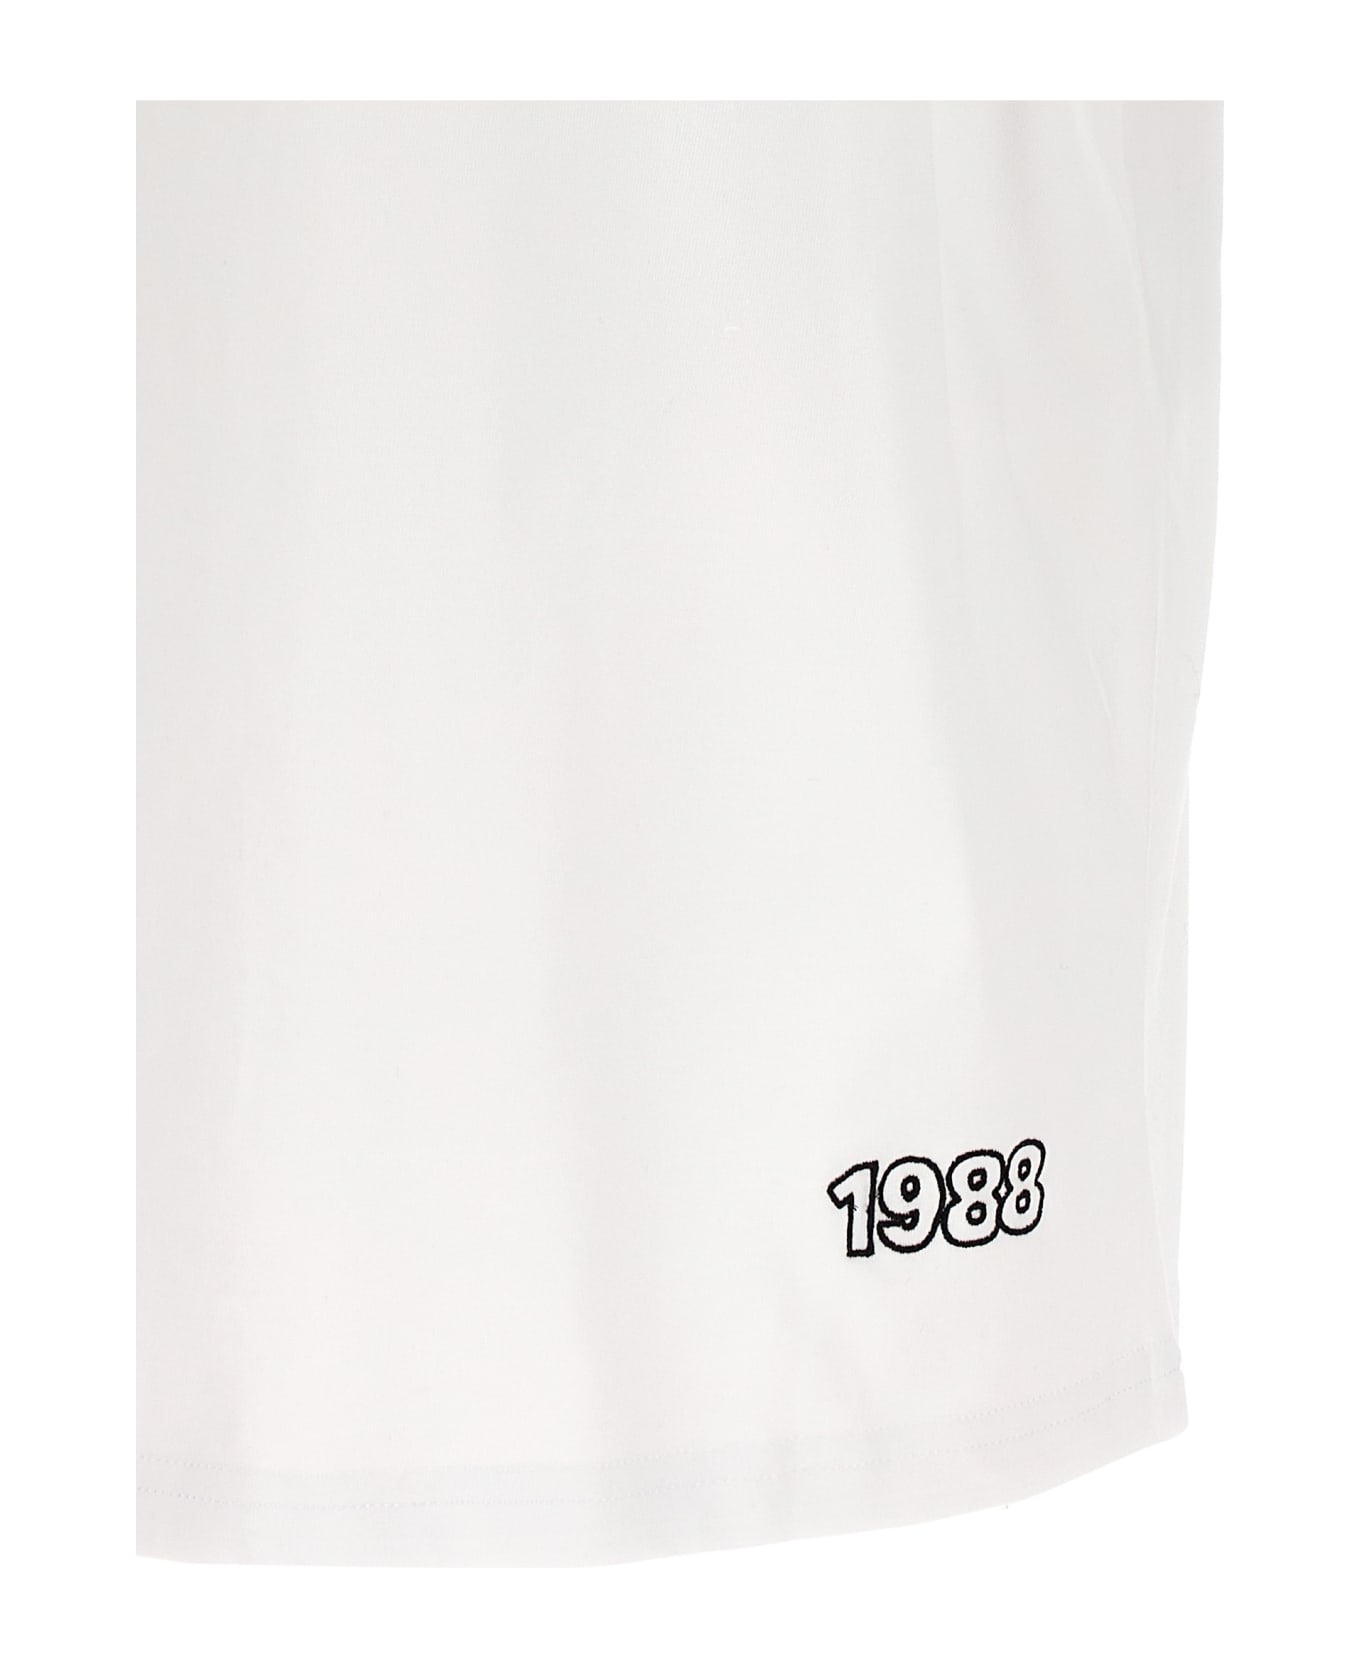 GCDS Printed T-shirt - White